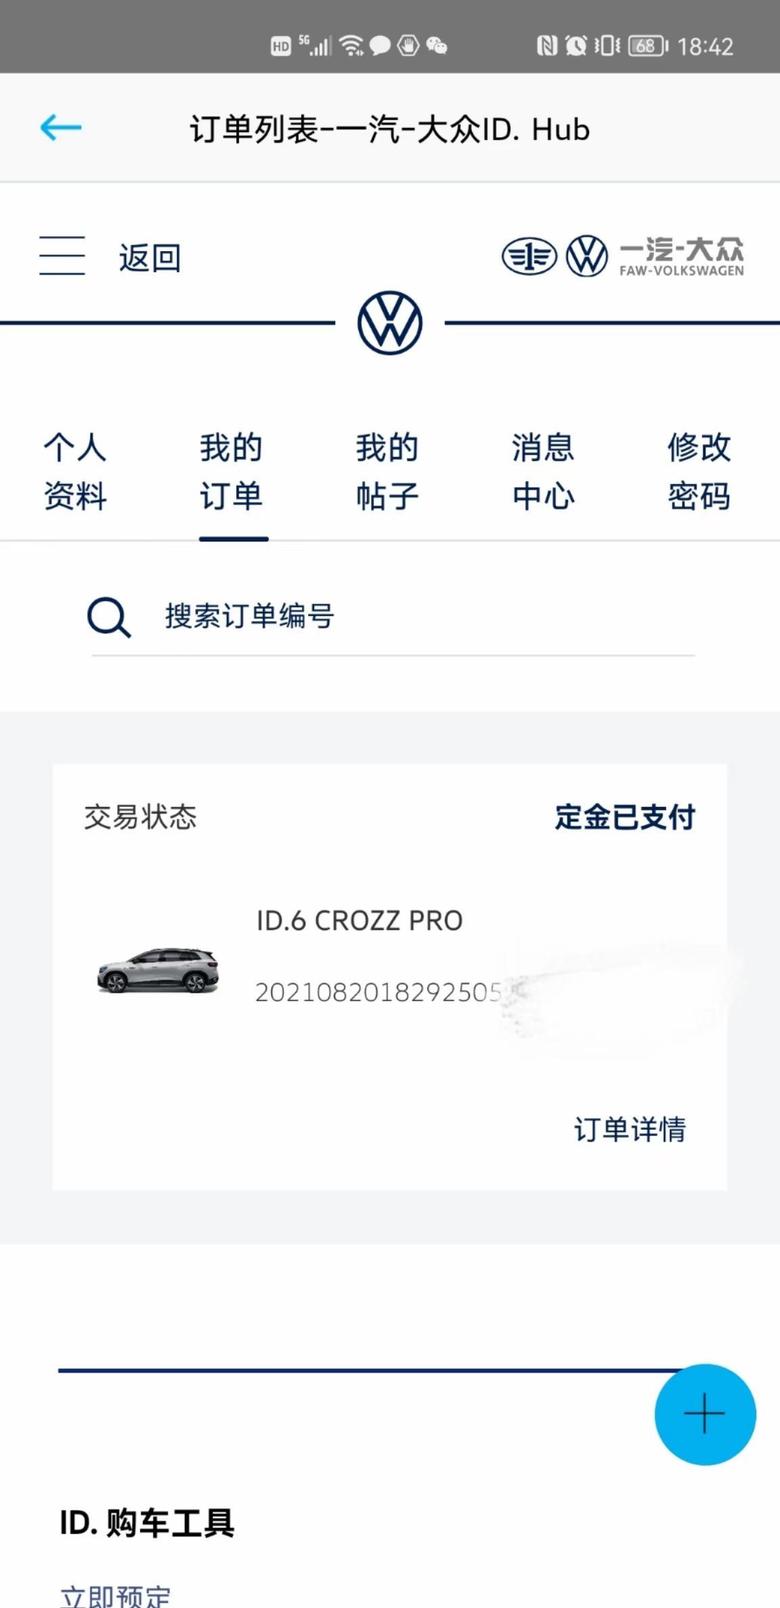 id.6 crozz这车从上市就一直在关注考虑了很久到底是X还是Crozz既然我是东北人就选一汽的Crozz吧?